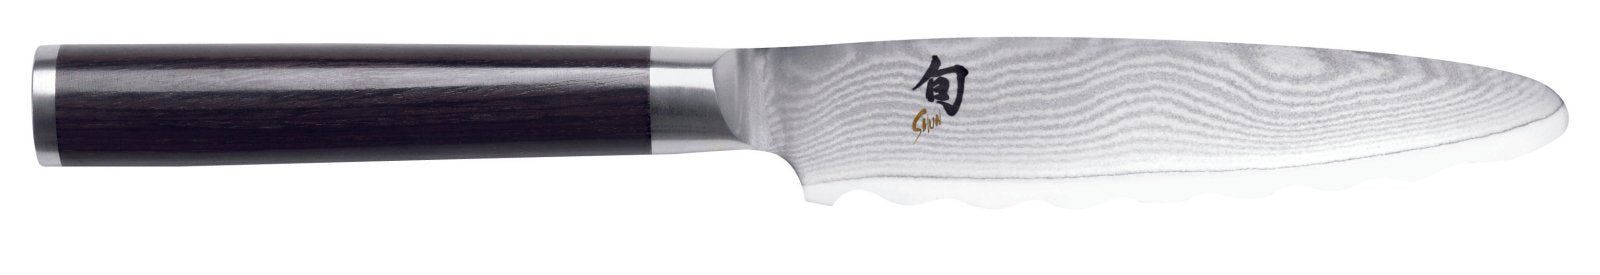 KAI Shun Cutlery Set - Utility Knife, Fork & Knife Rest - KAI-DM-0908 - The Cotswold Knife Company